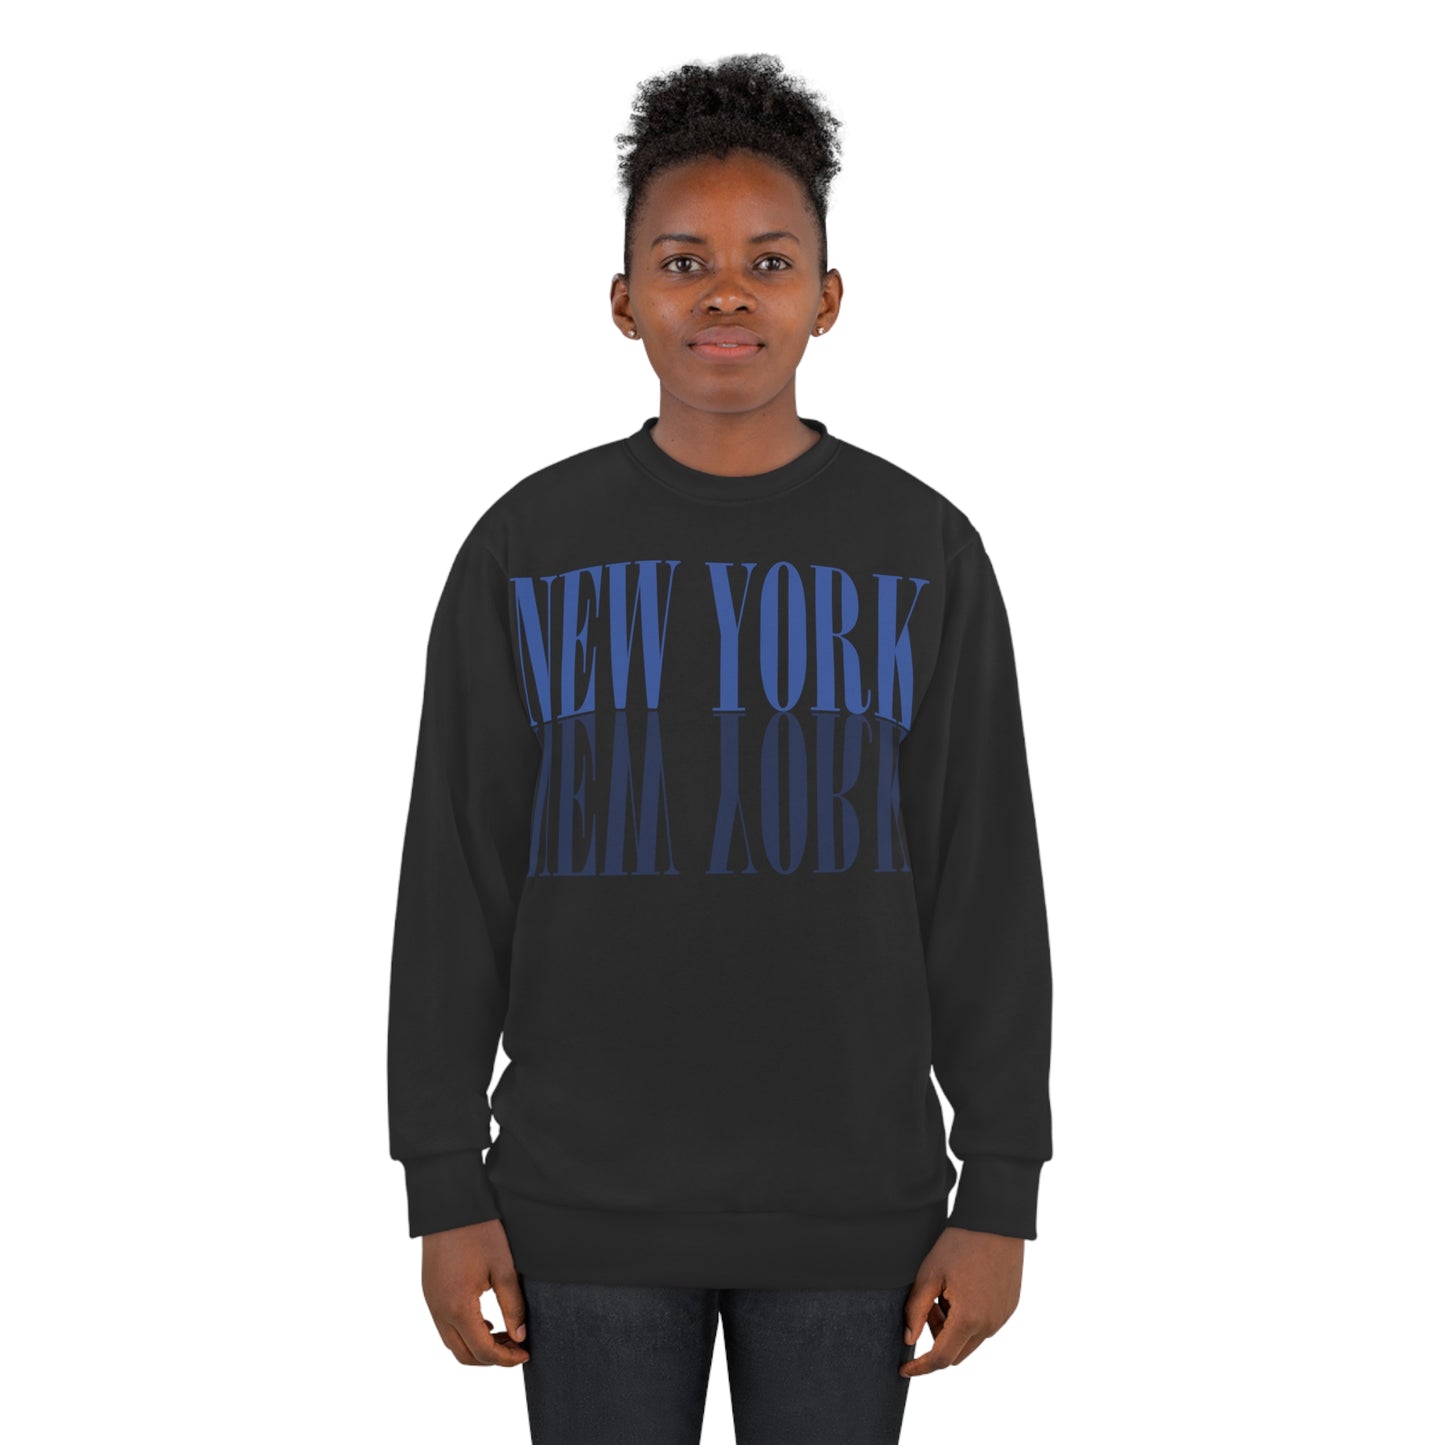 New York, New York Sweater with Fleece Lining